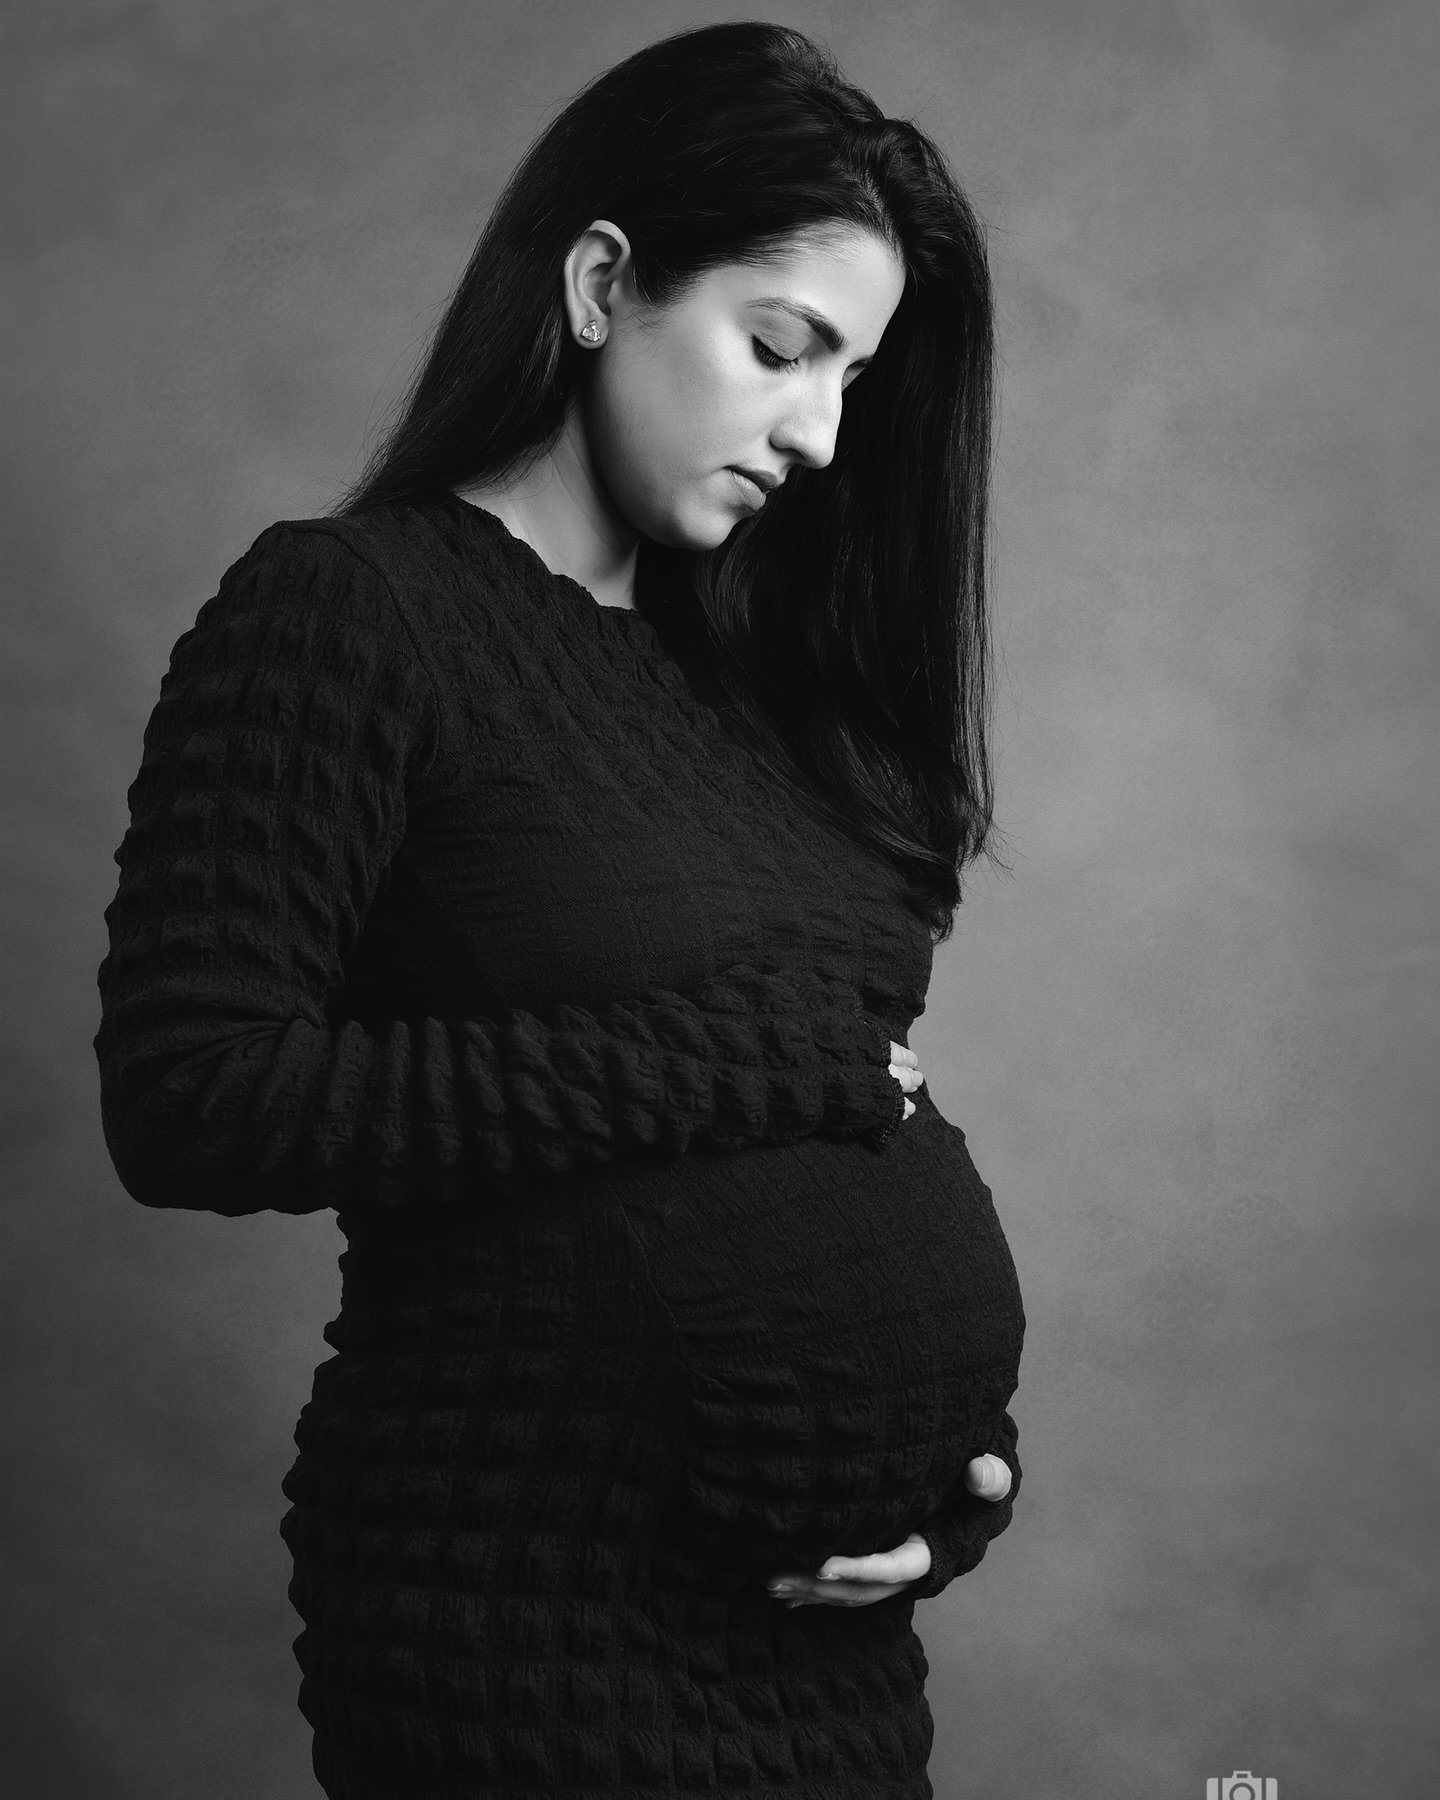 The gorgeous mommy✨
@saramahajan89 
.
.
@wondersbythememorytrunk
📍The Memory Trunk Studio, Jammu

#babyshoots #maternityphotoshoot #familyphotographer #kidsphotography #baby #love #thememorytrunk #momtobe #momlife #maternityphotos #babybump #pregnan